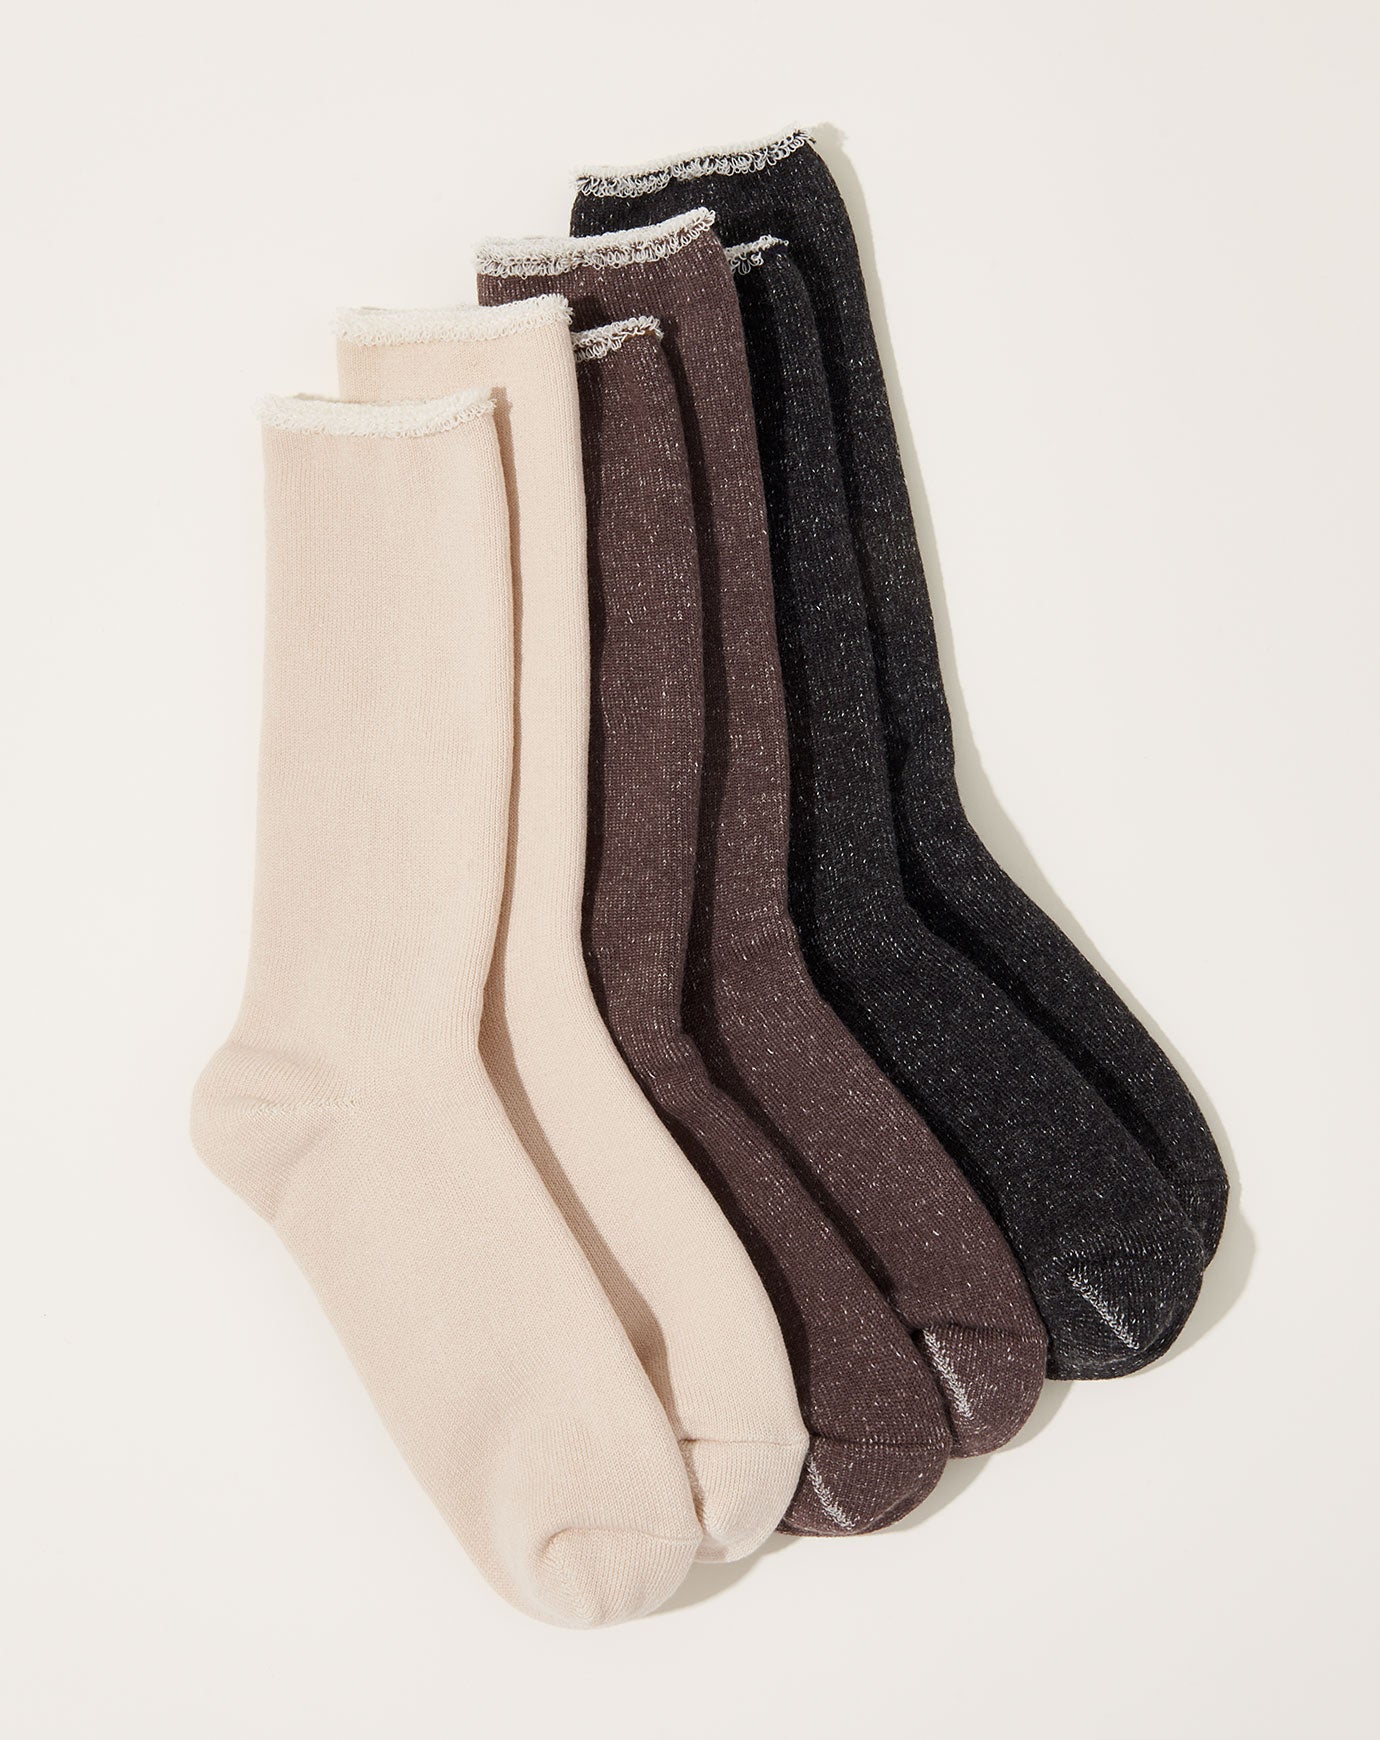 Hakne Cotton Wool Pile Socks in Charcoal